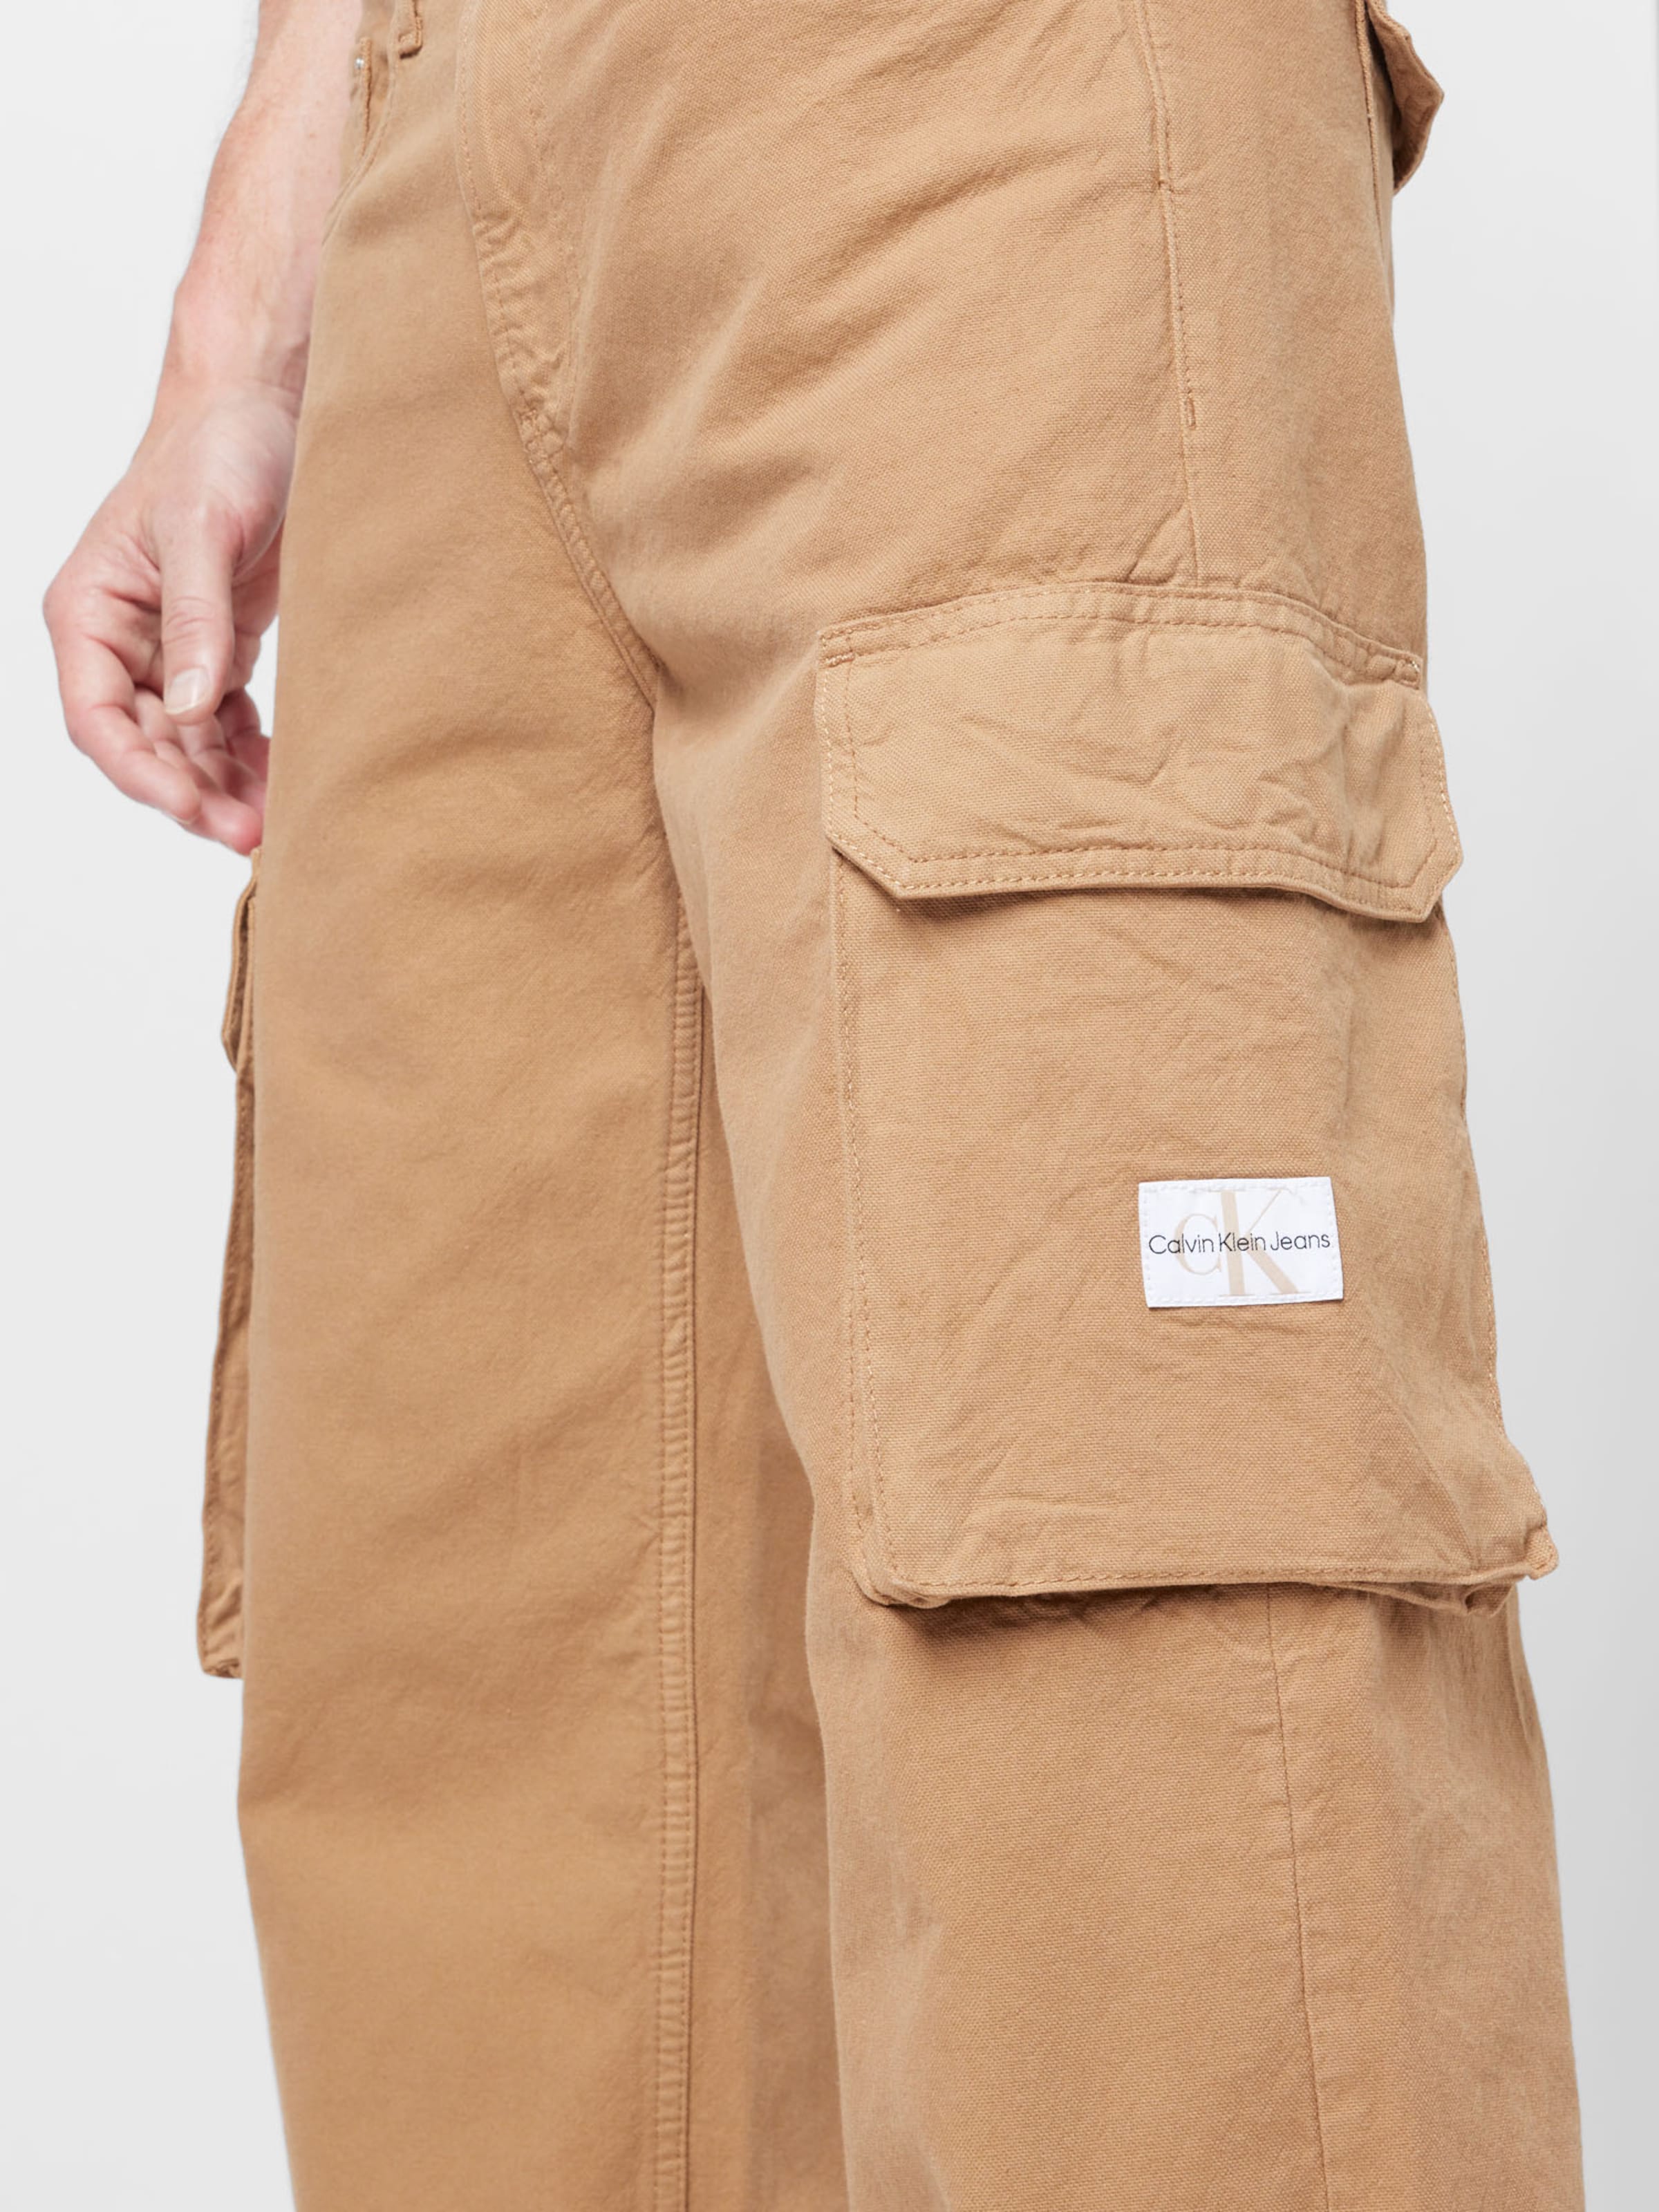 Calvin Klein Slim Fit Performance Stretch Pants Men's 38W 32L Cargo Green |  eBay